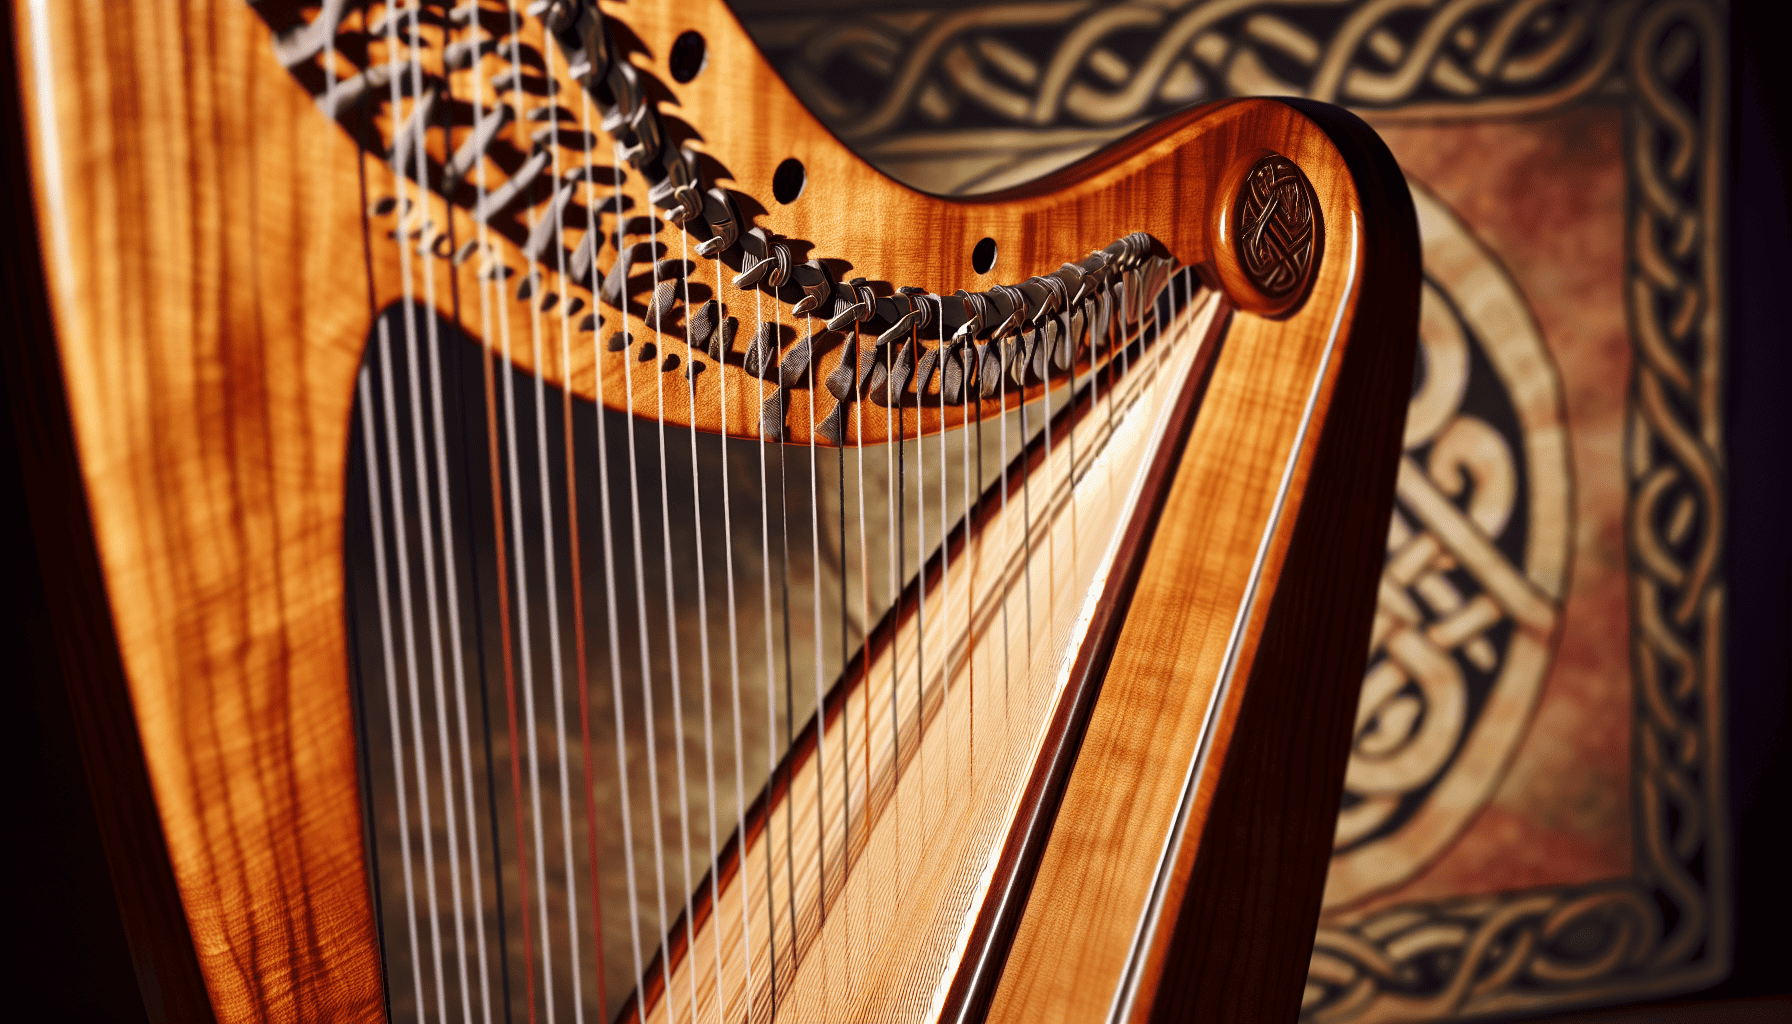 Celtic Harp, Ireland's national instrument